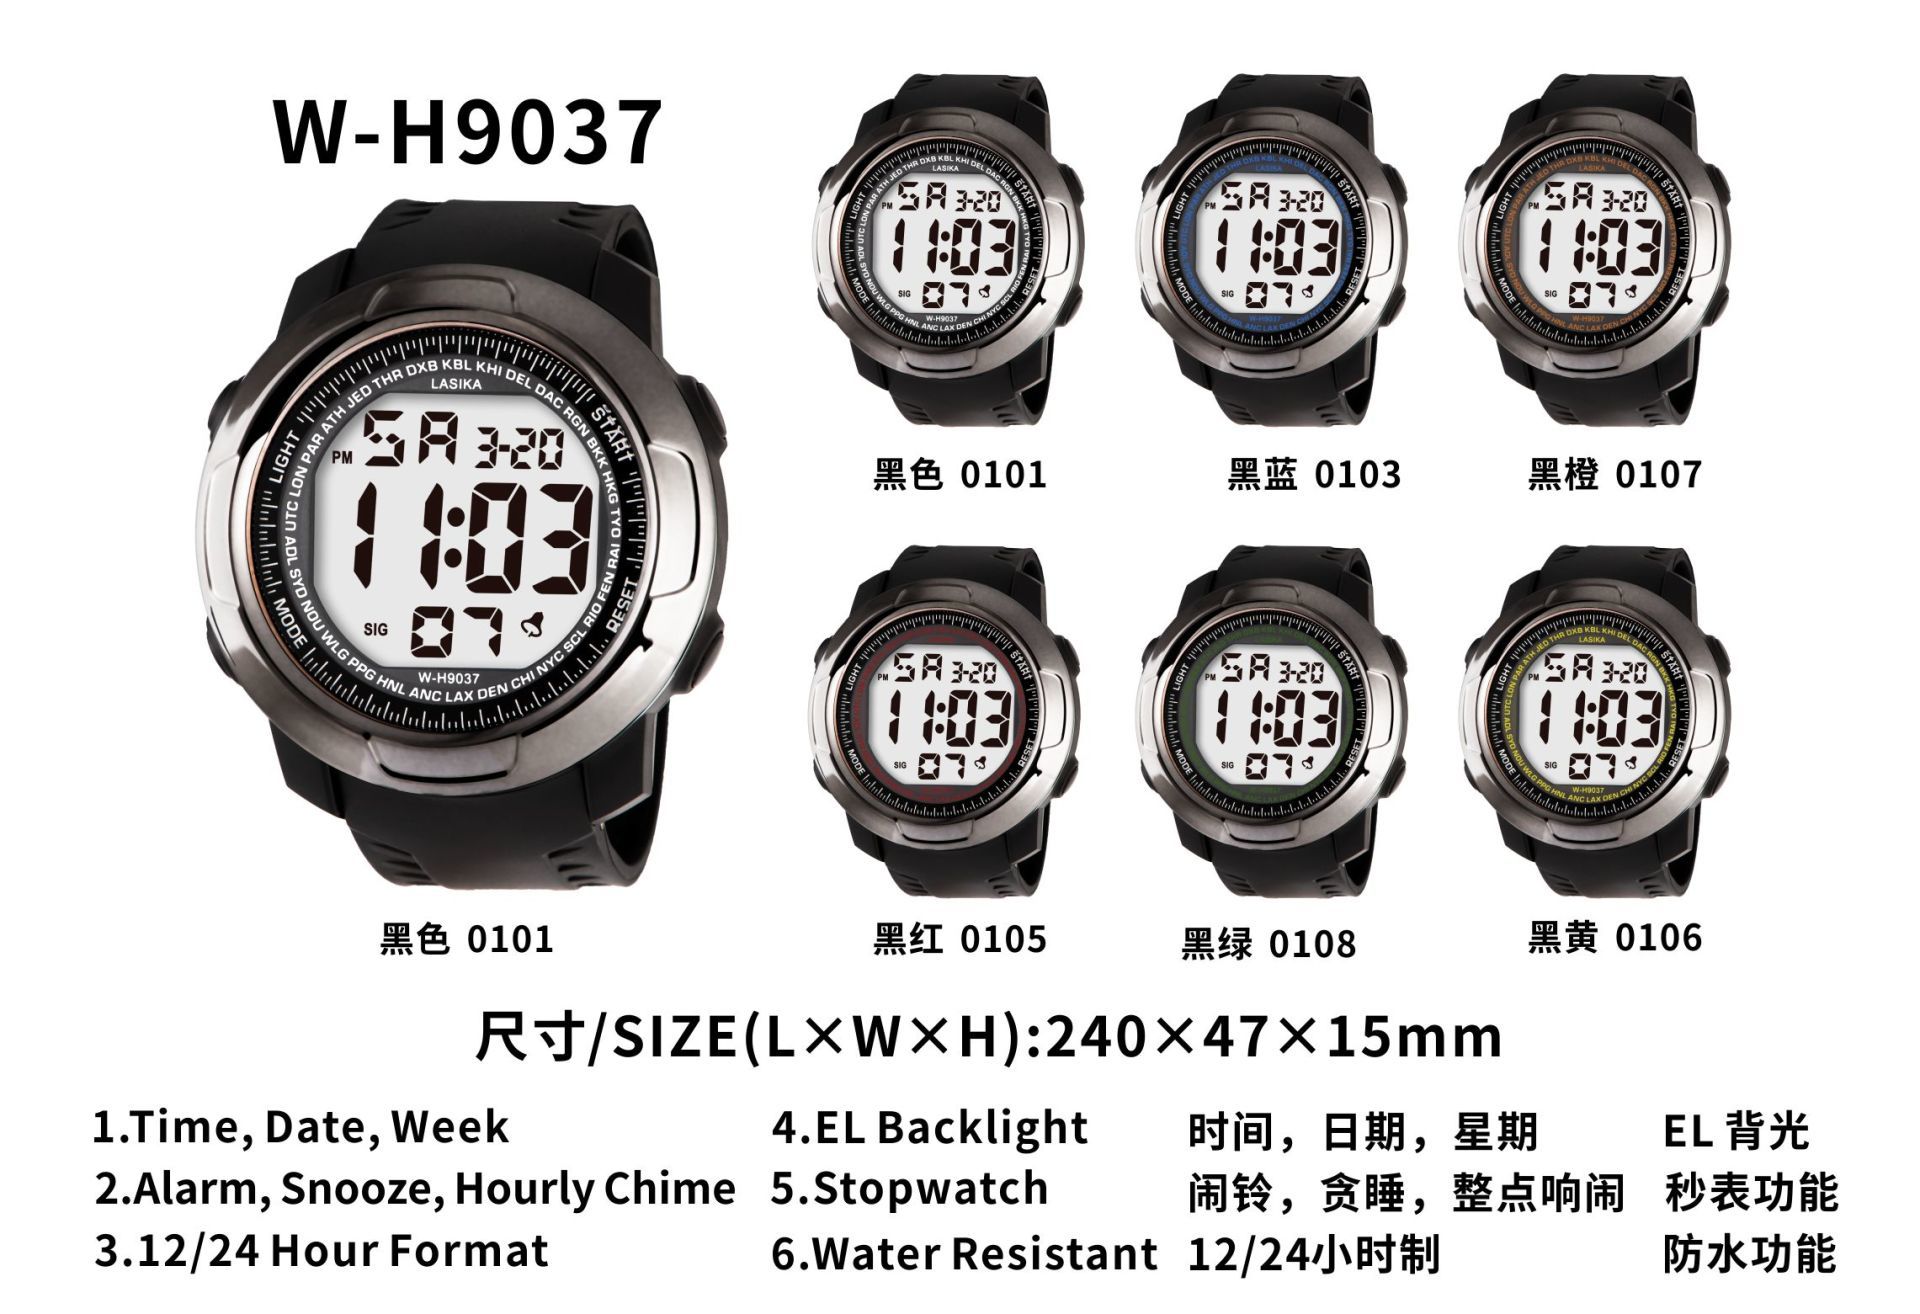 LASIKA Men's Digital Sports Watch Waterproof Tactical Watch with LED Backlight Watch for Men #9037